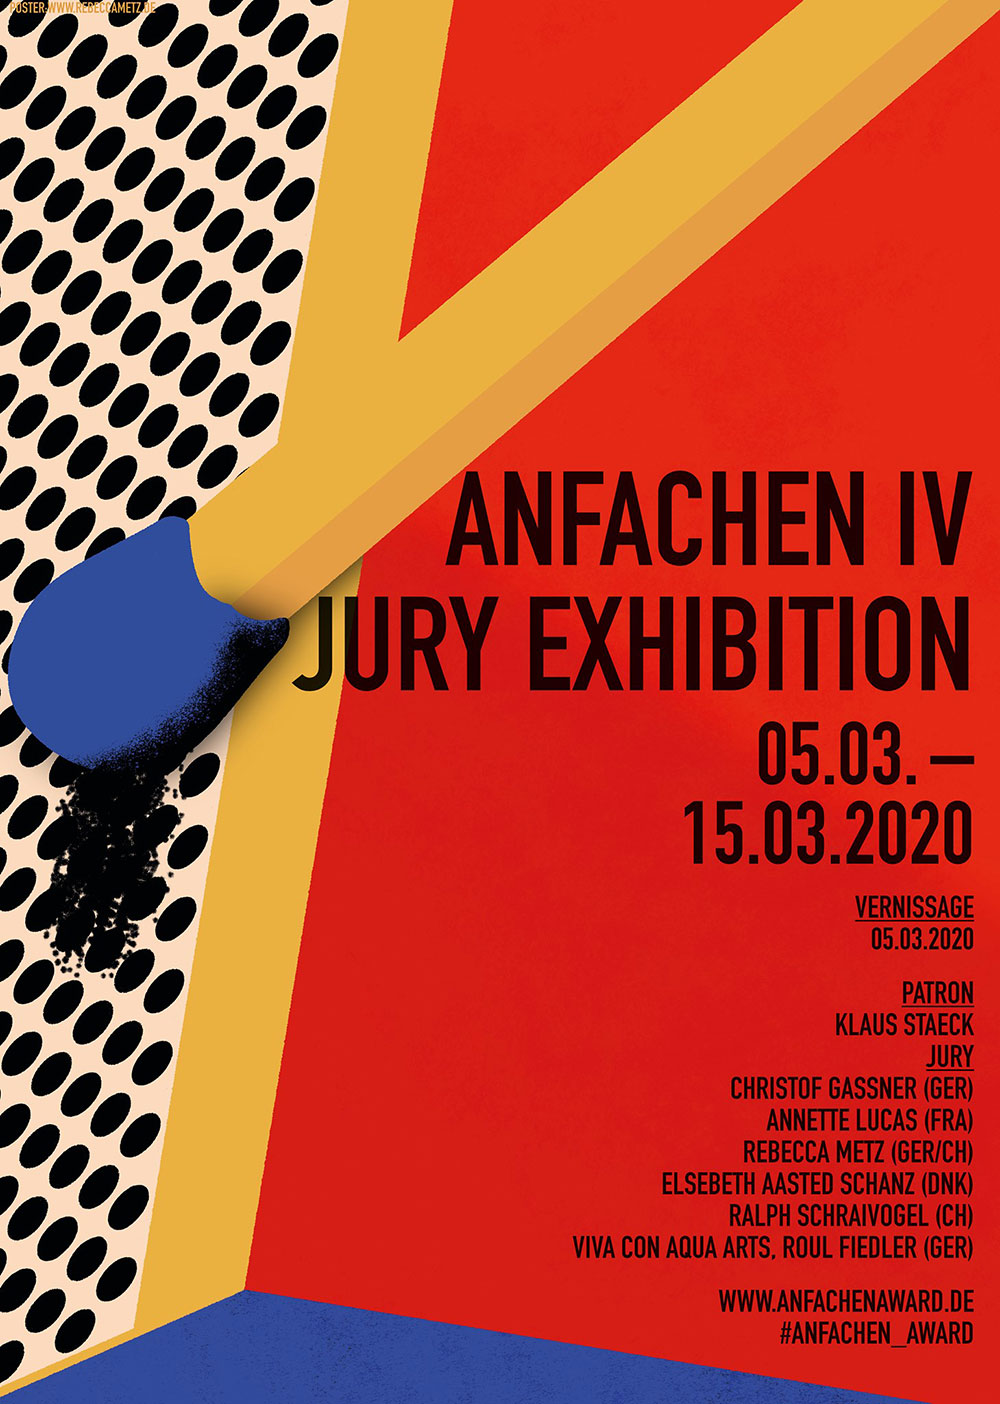 Anfachen Award IV, Jury Exhibition